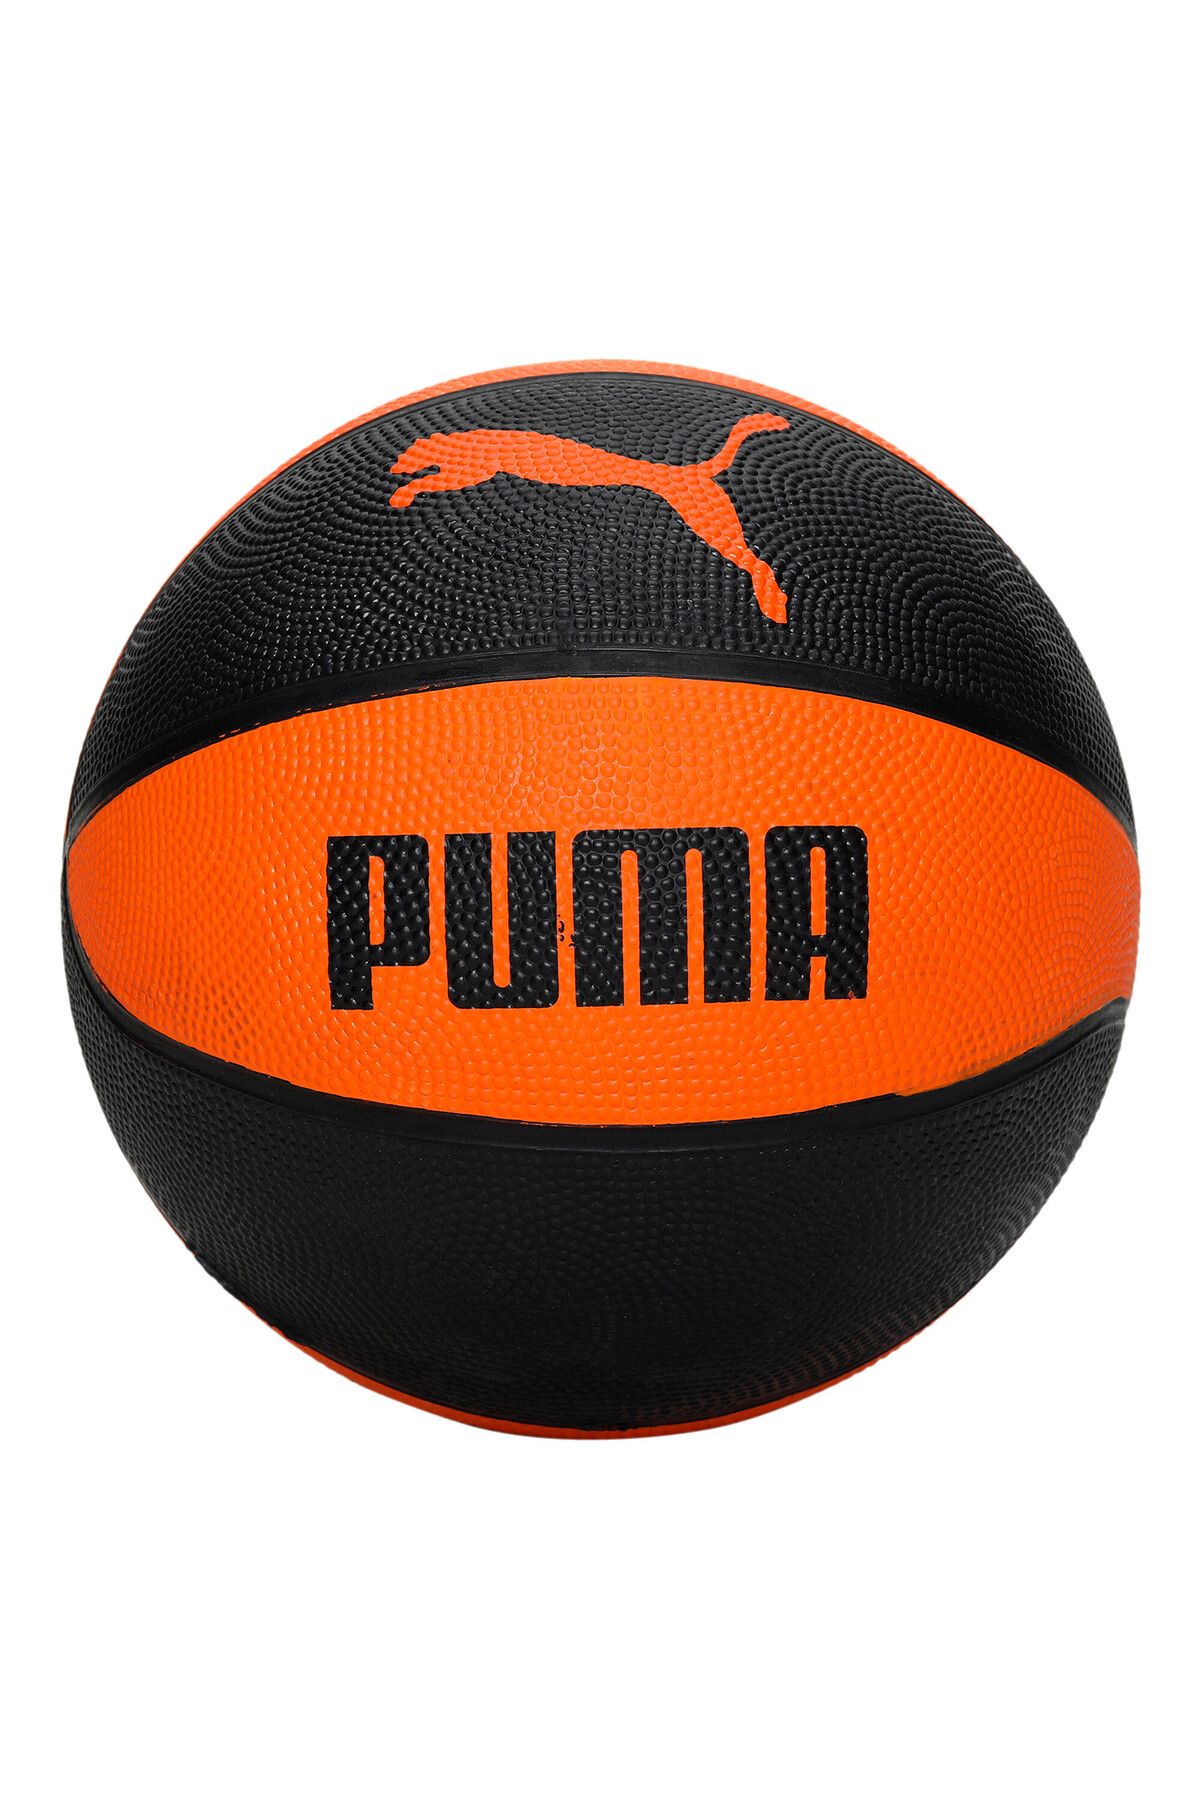 Puma Basketbol  Indoor Basketbol Topu